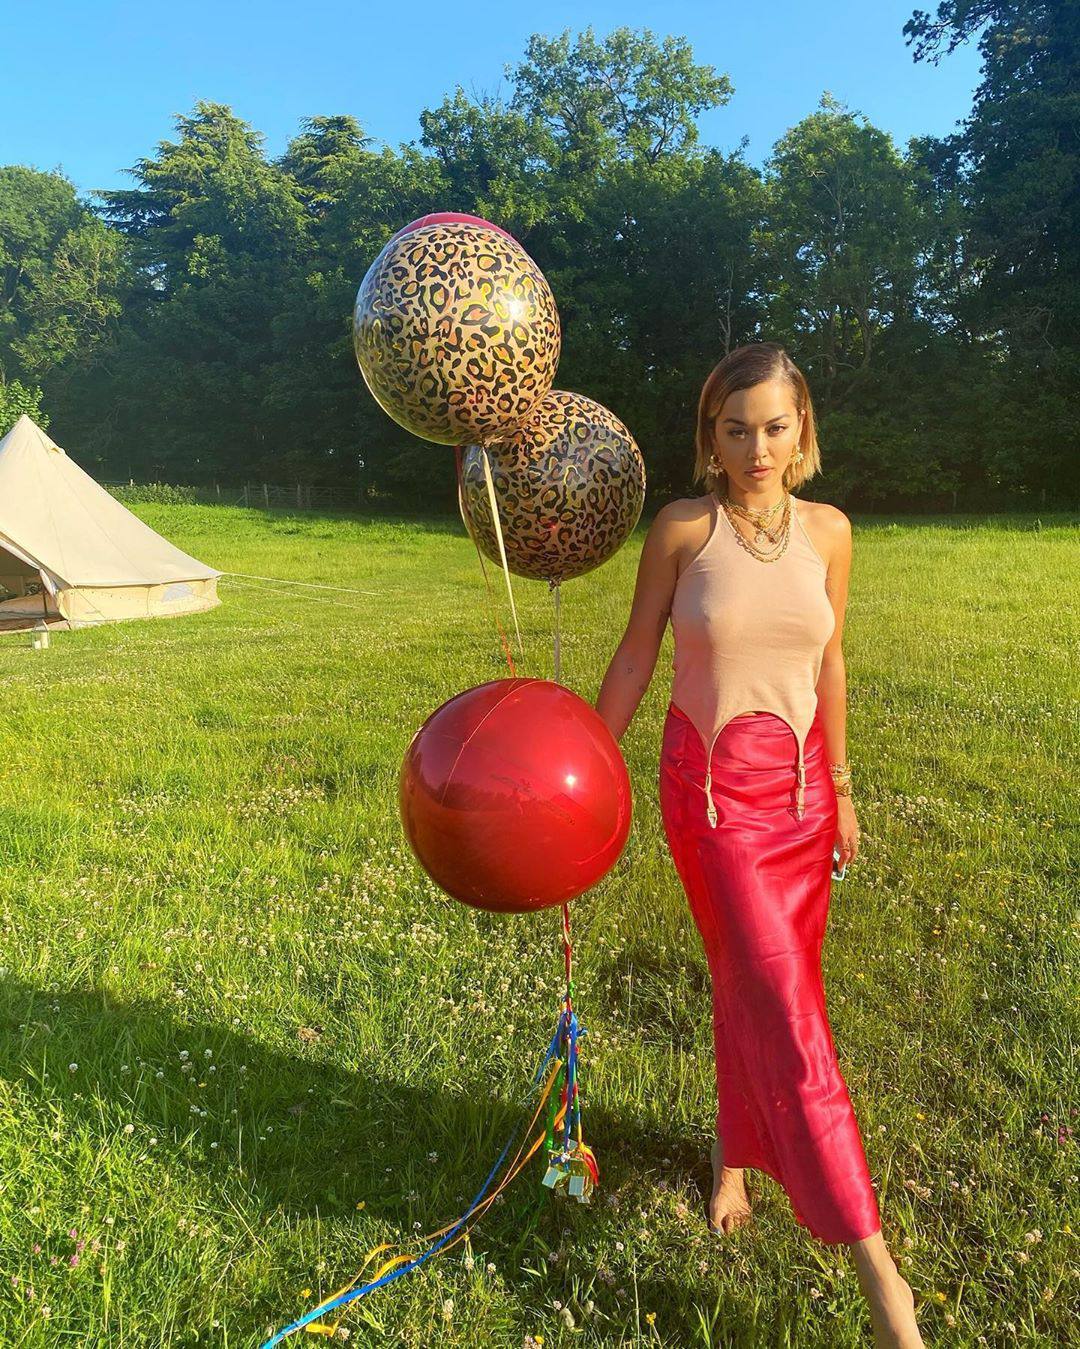 Rita Ora – Sexy Boobs In Braless Photoshoot At Balloon Party 0003